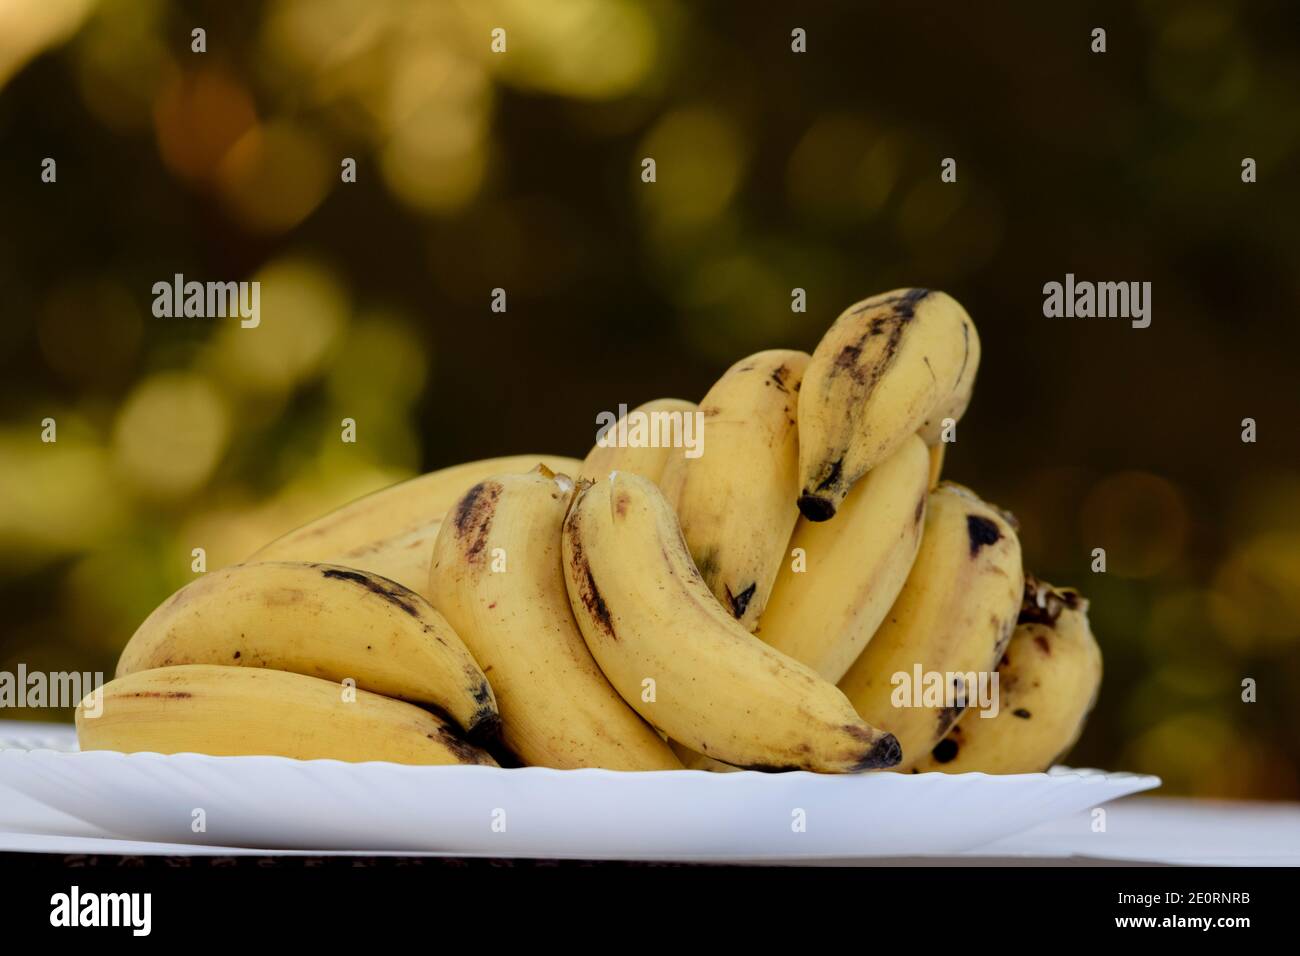 Banana Fresh Yellow Ripe Bananas Fruit Kela Banana-fruit Bunch Heap  Cavendish Musa Tropical Organic Food Closeup View Image Photo Stock Image -  Image of genus, musa: 259036975